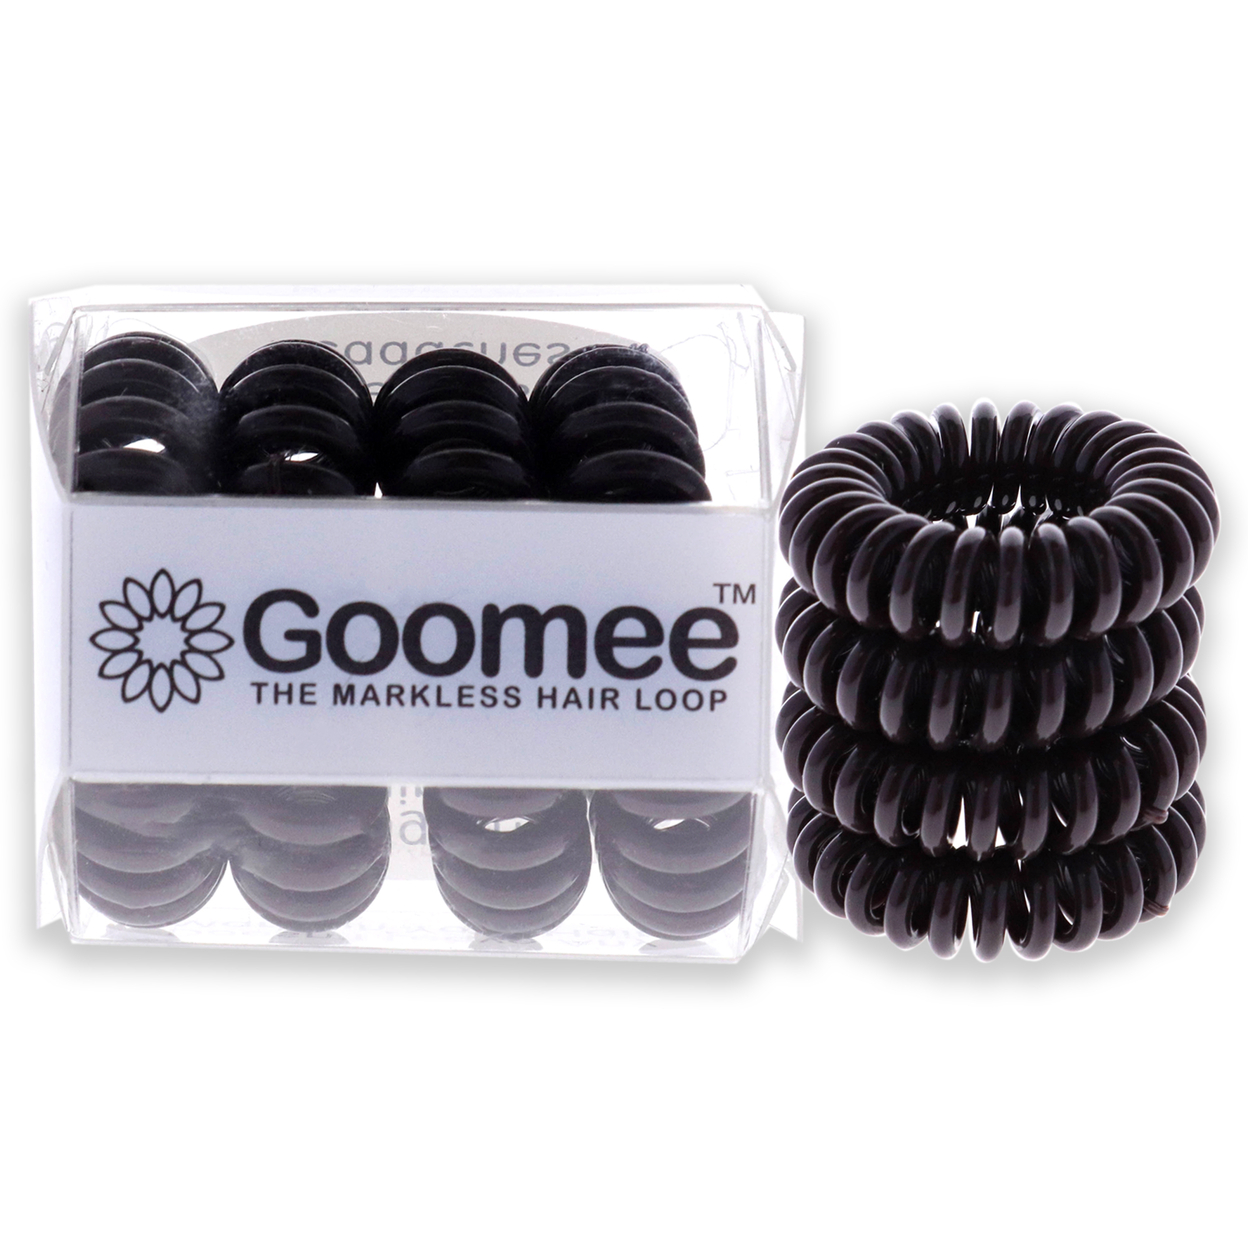 Goomee The Markless Hair Loop Set - Coco Brown Hair Tie 4 Pc